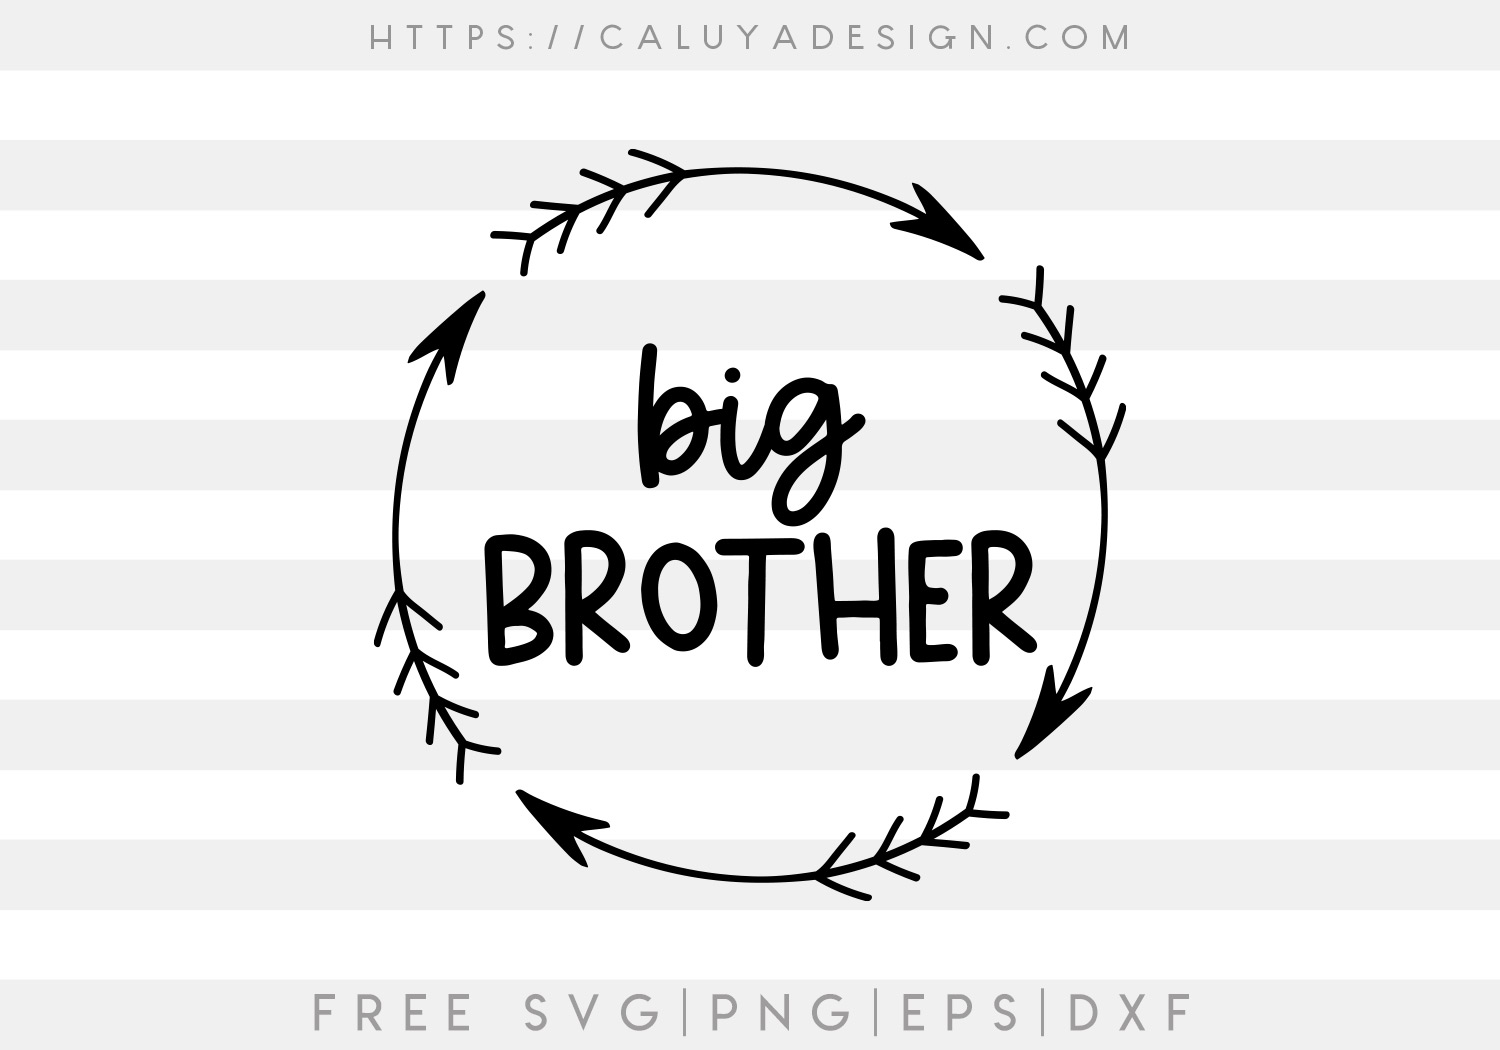 Free Big Brother SVG - CALUYA DESIGN.